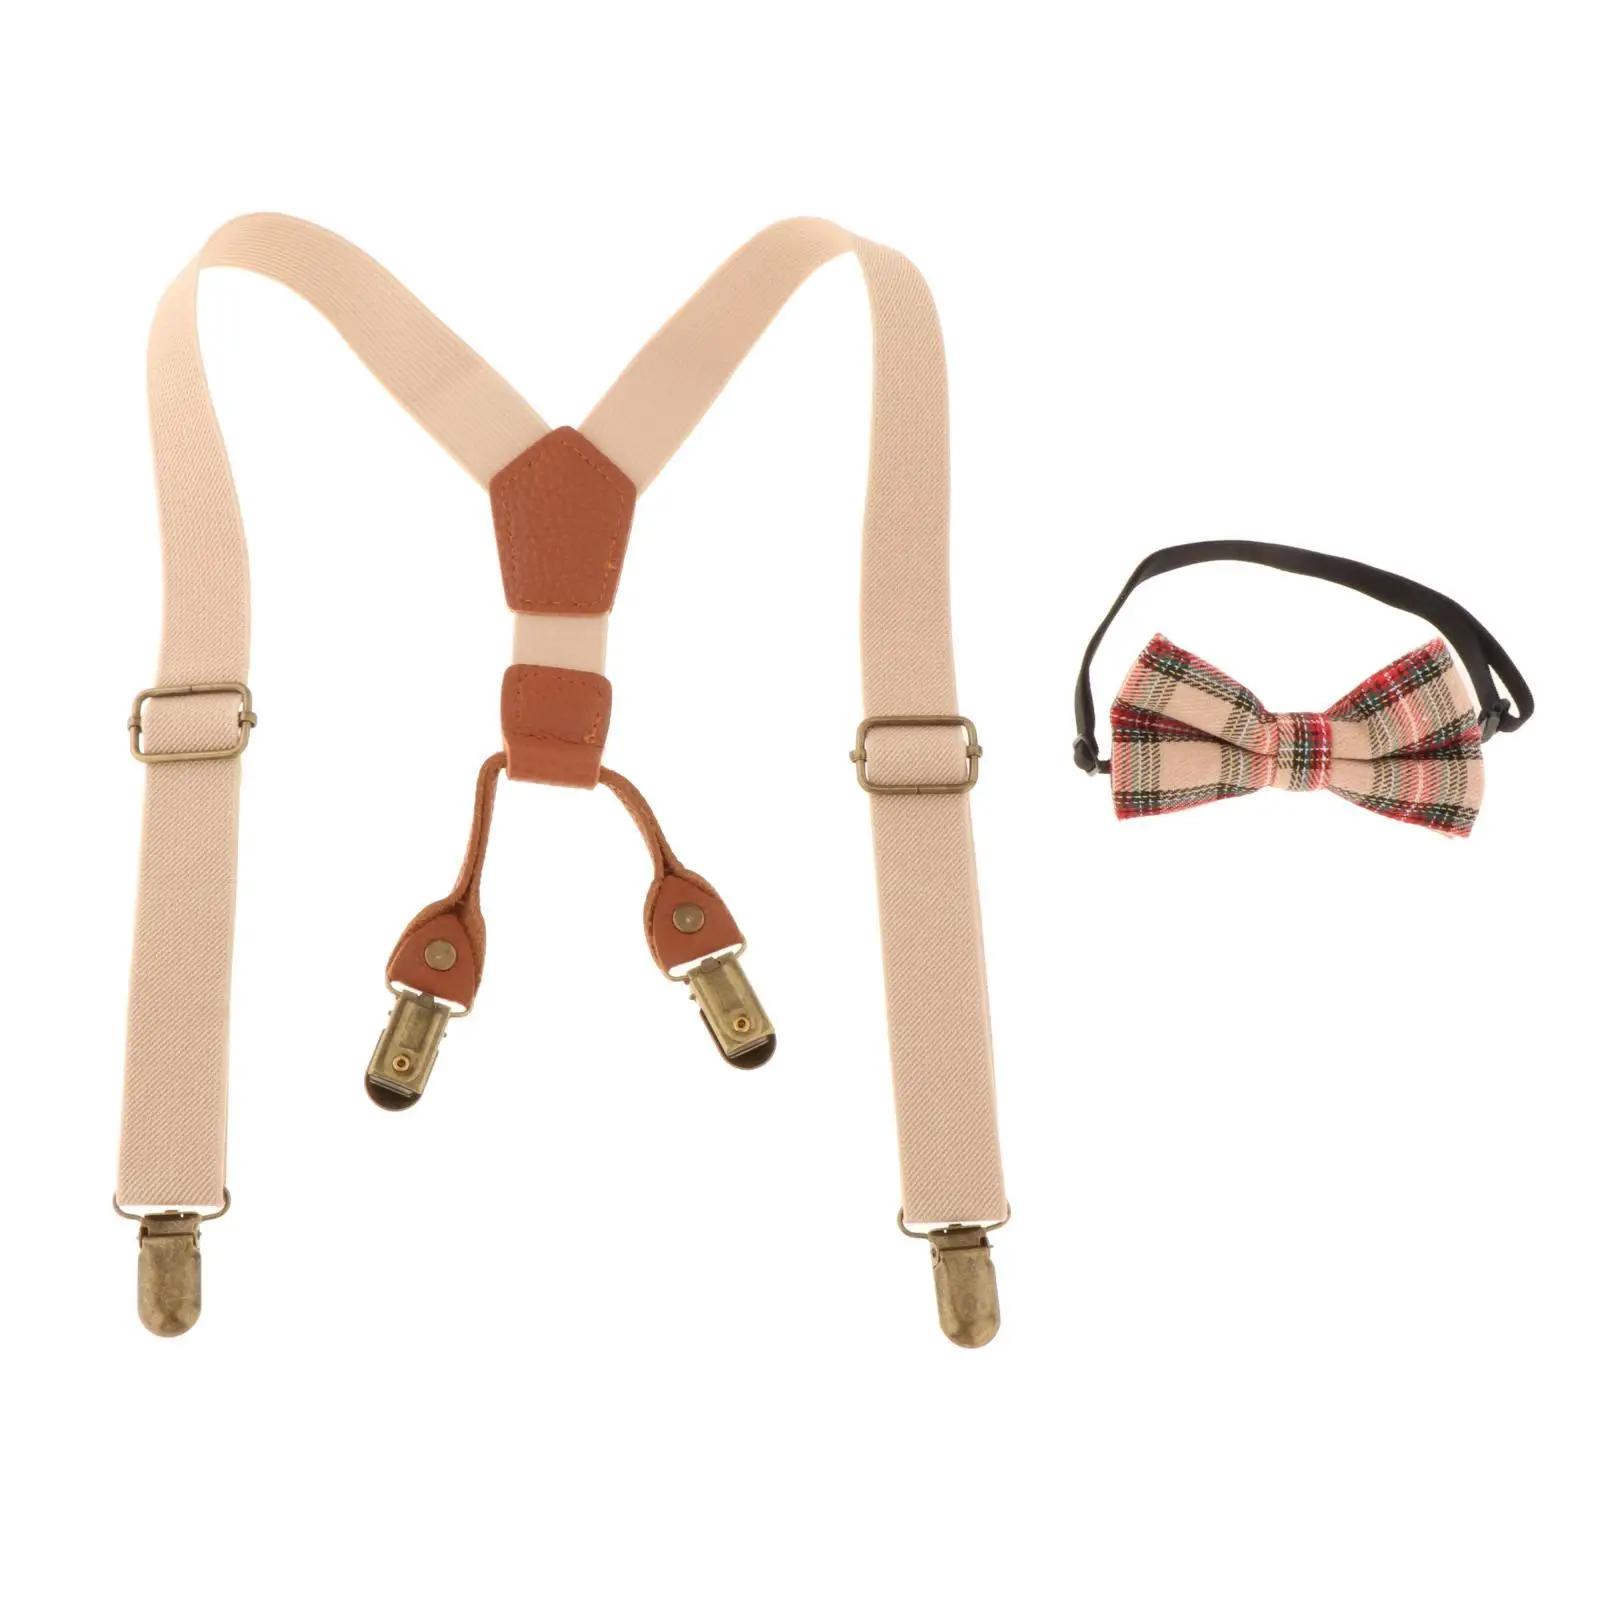 Kids Suspenders & Bowtie Set 4 Clips Elastic Straps 1 inch Wide Adjustable Braces for Boys Girls